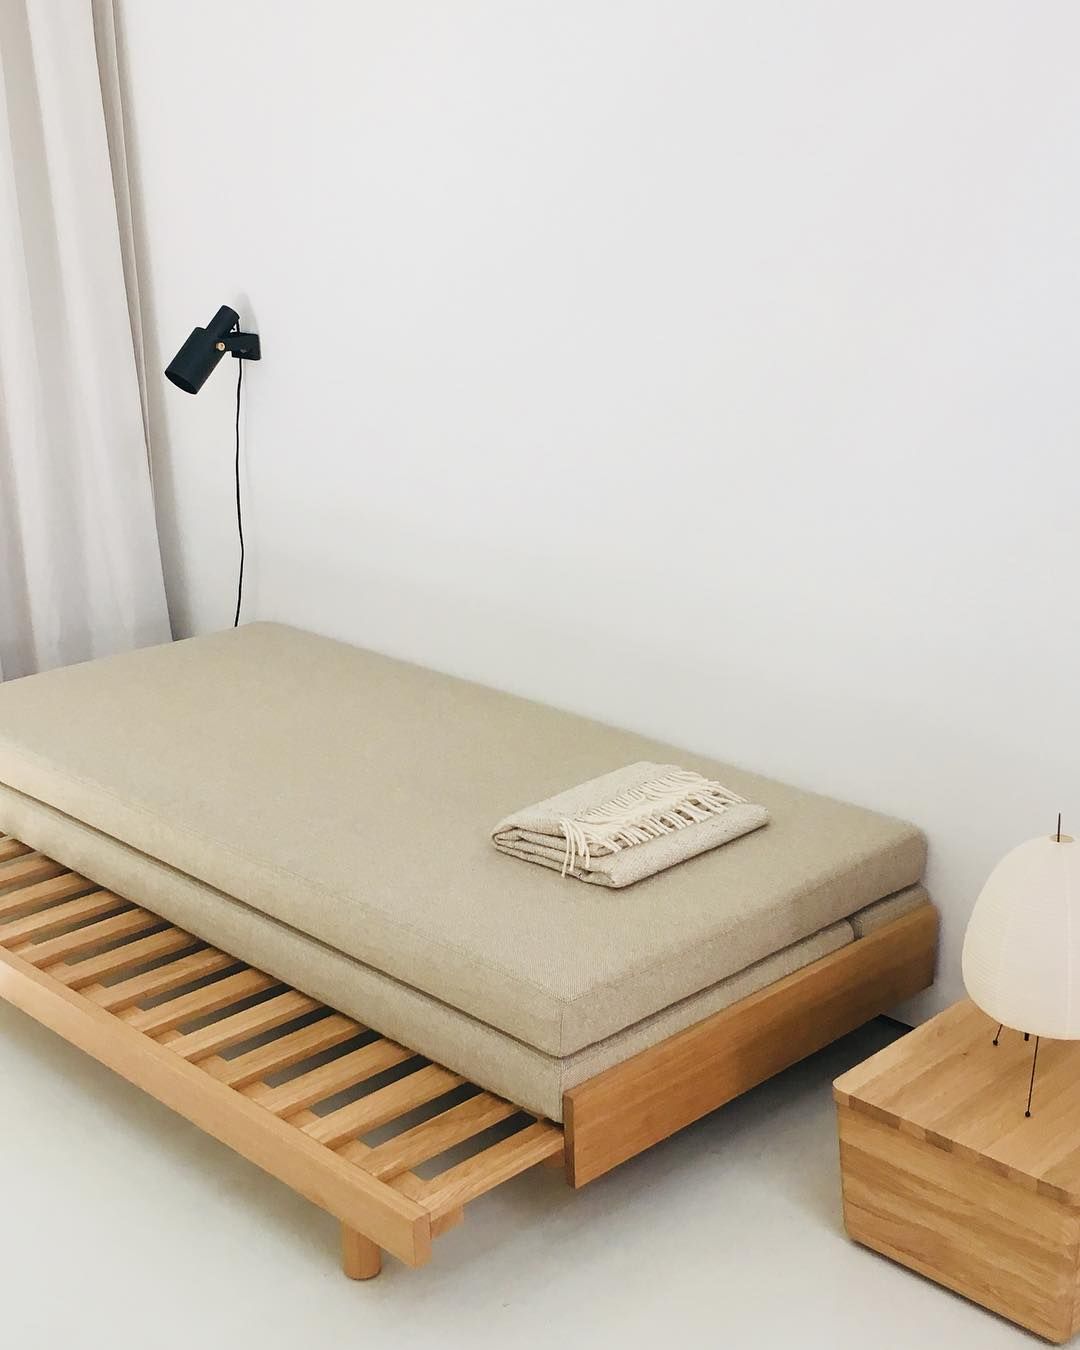 Restful Retreat: Explore the Latest in Bed Mattress Designs